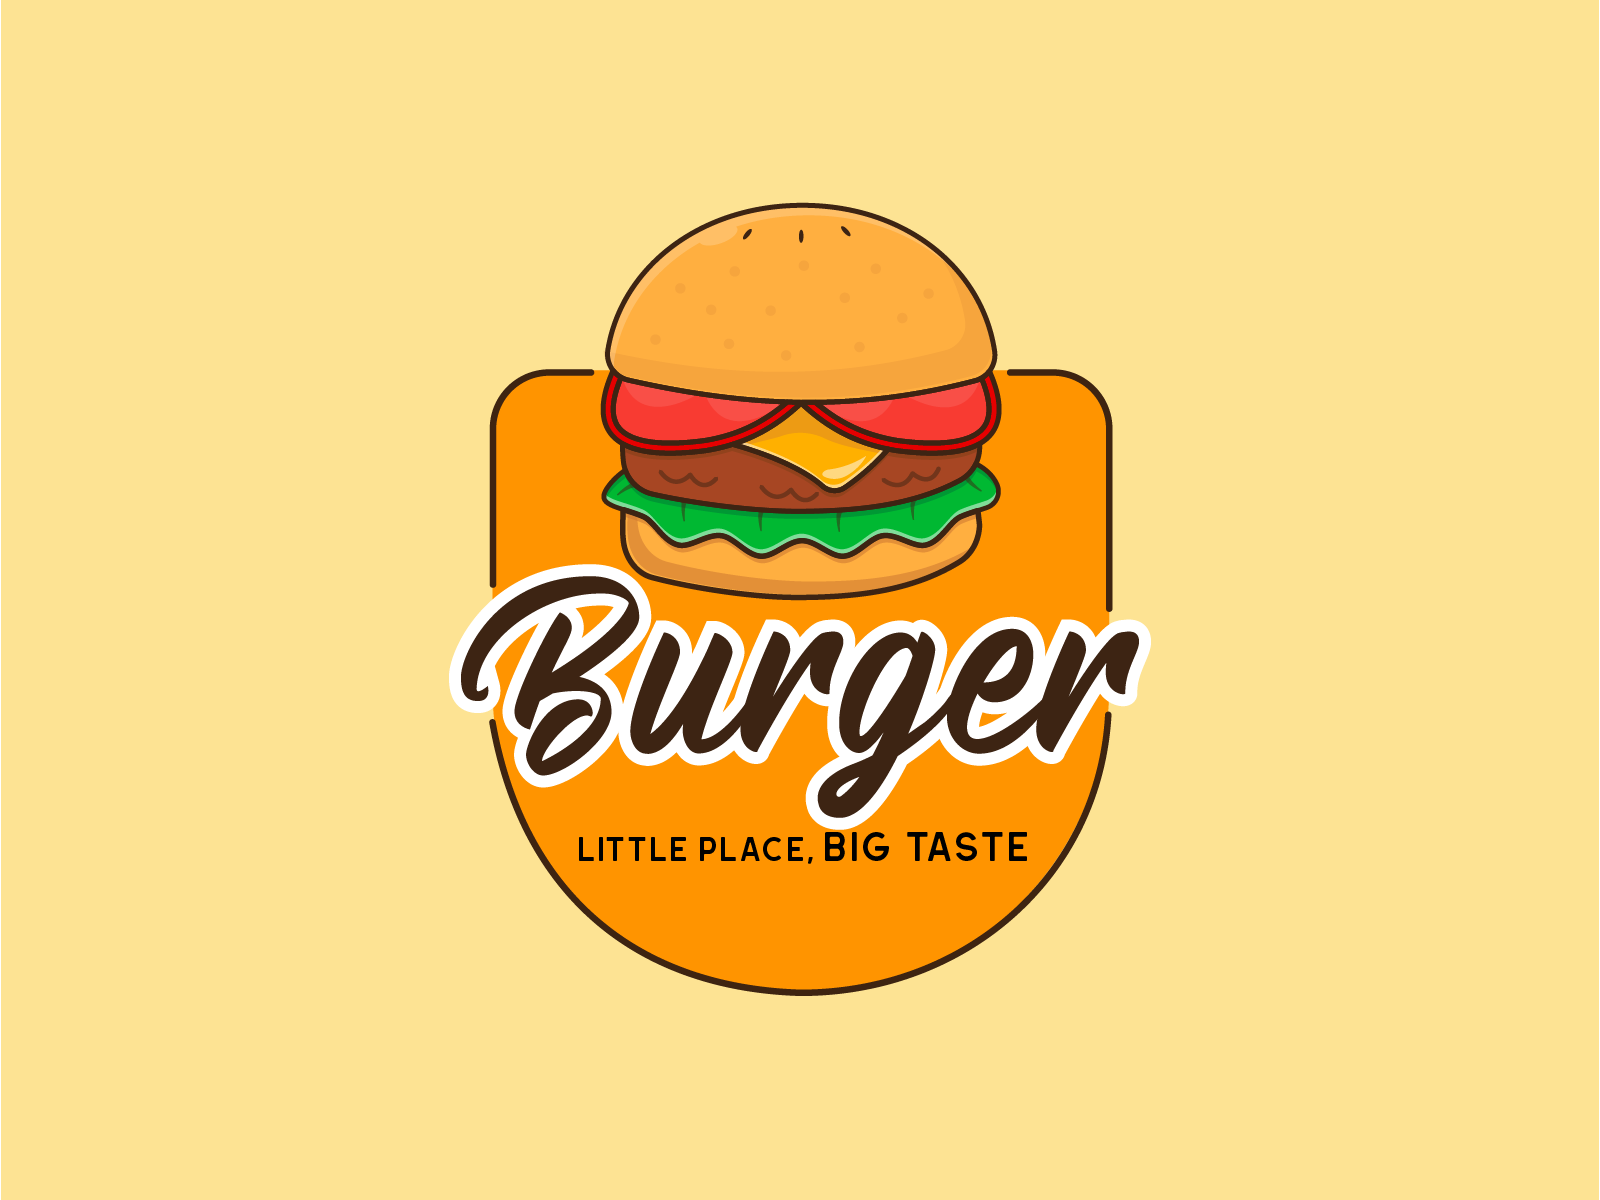 Hat Creek Burger Company | Hat Creek Burger Company: A Family…